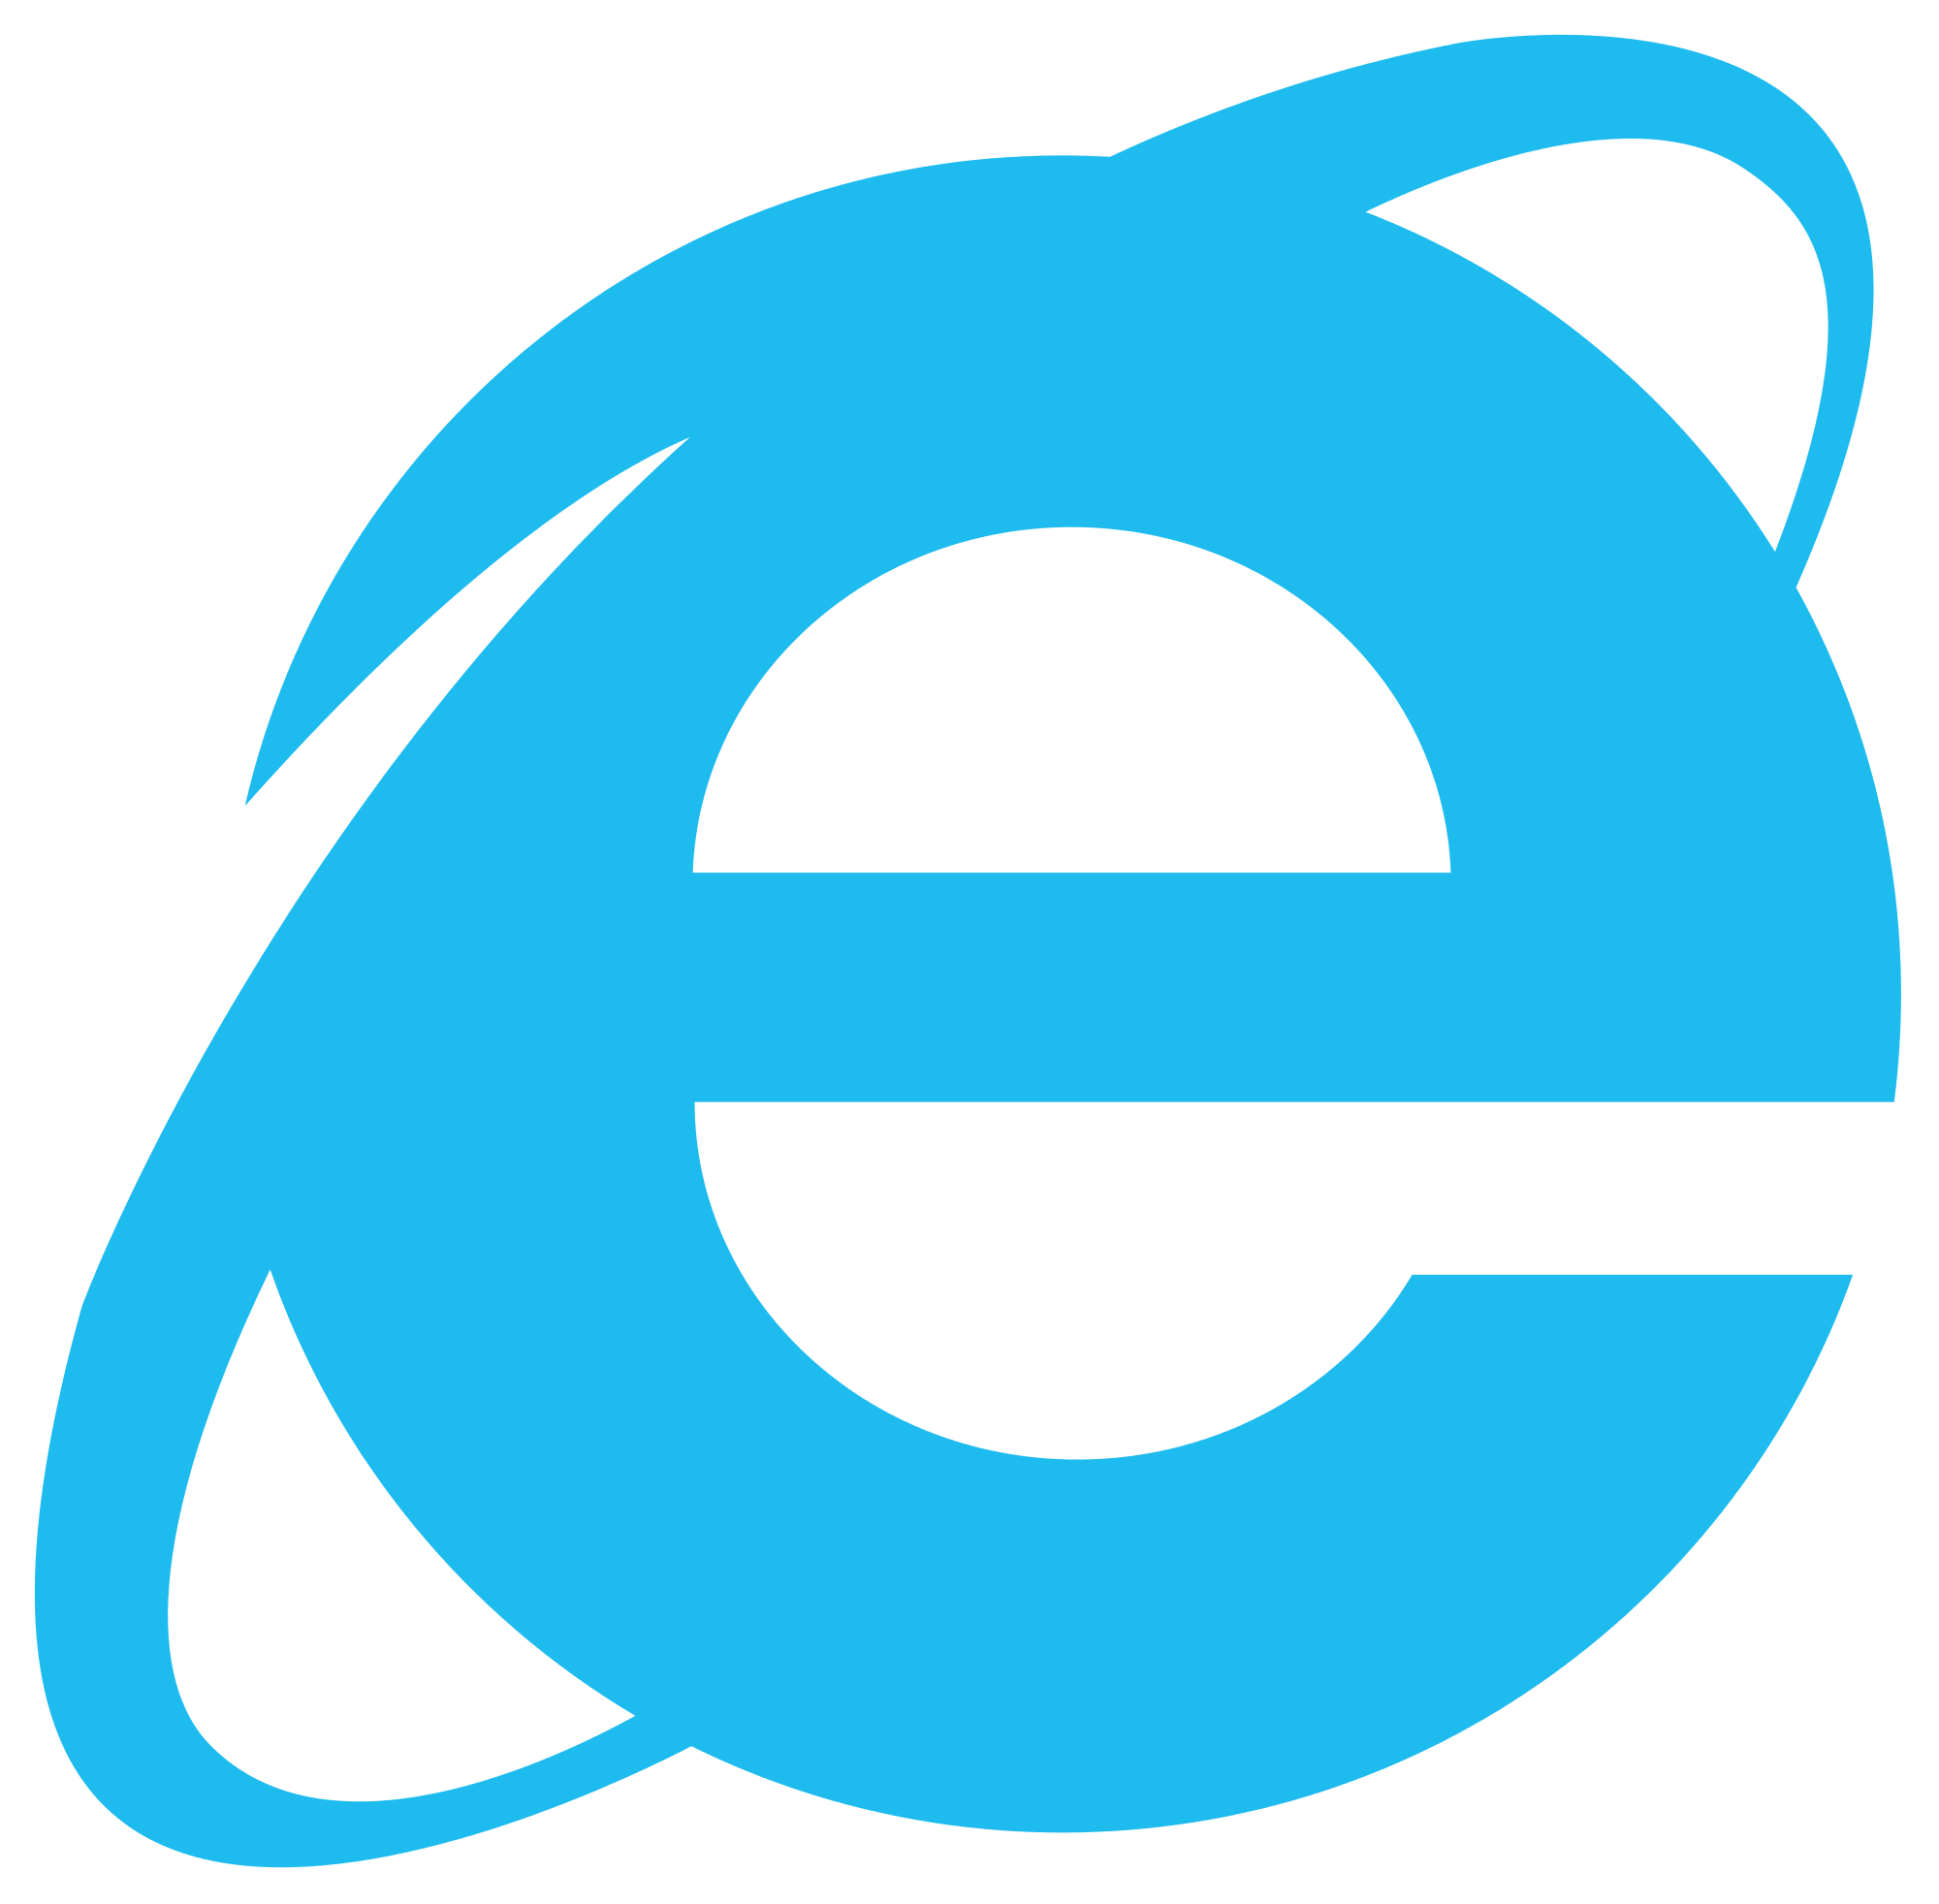 internet explorer 11 free download for windows 7 64 bit